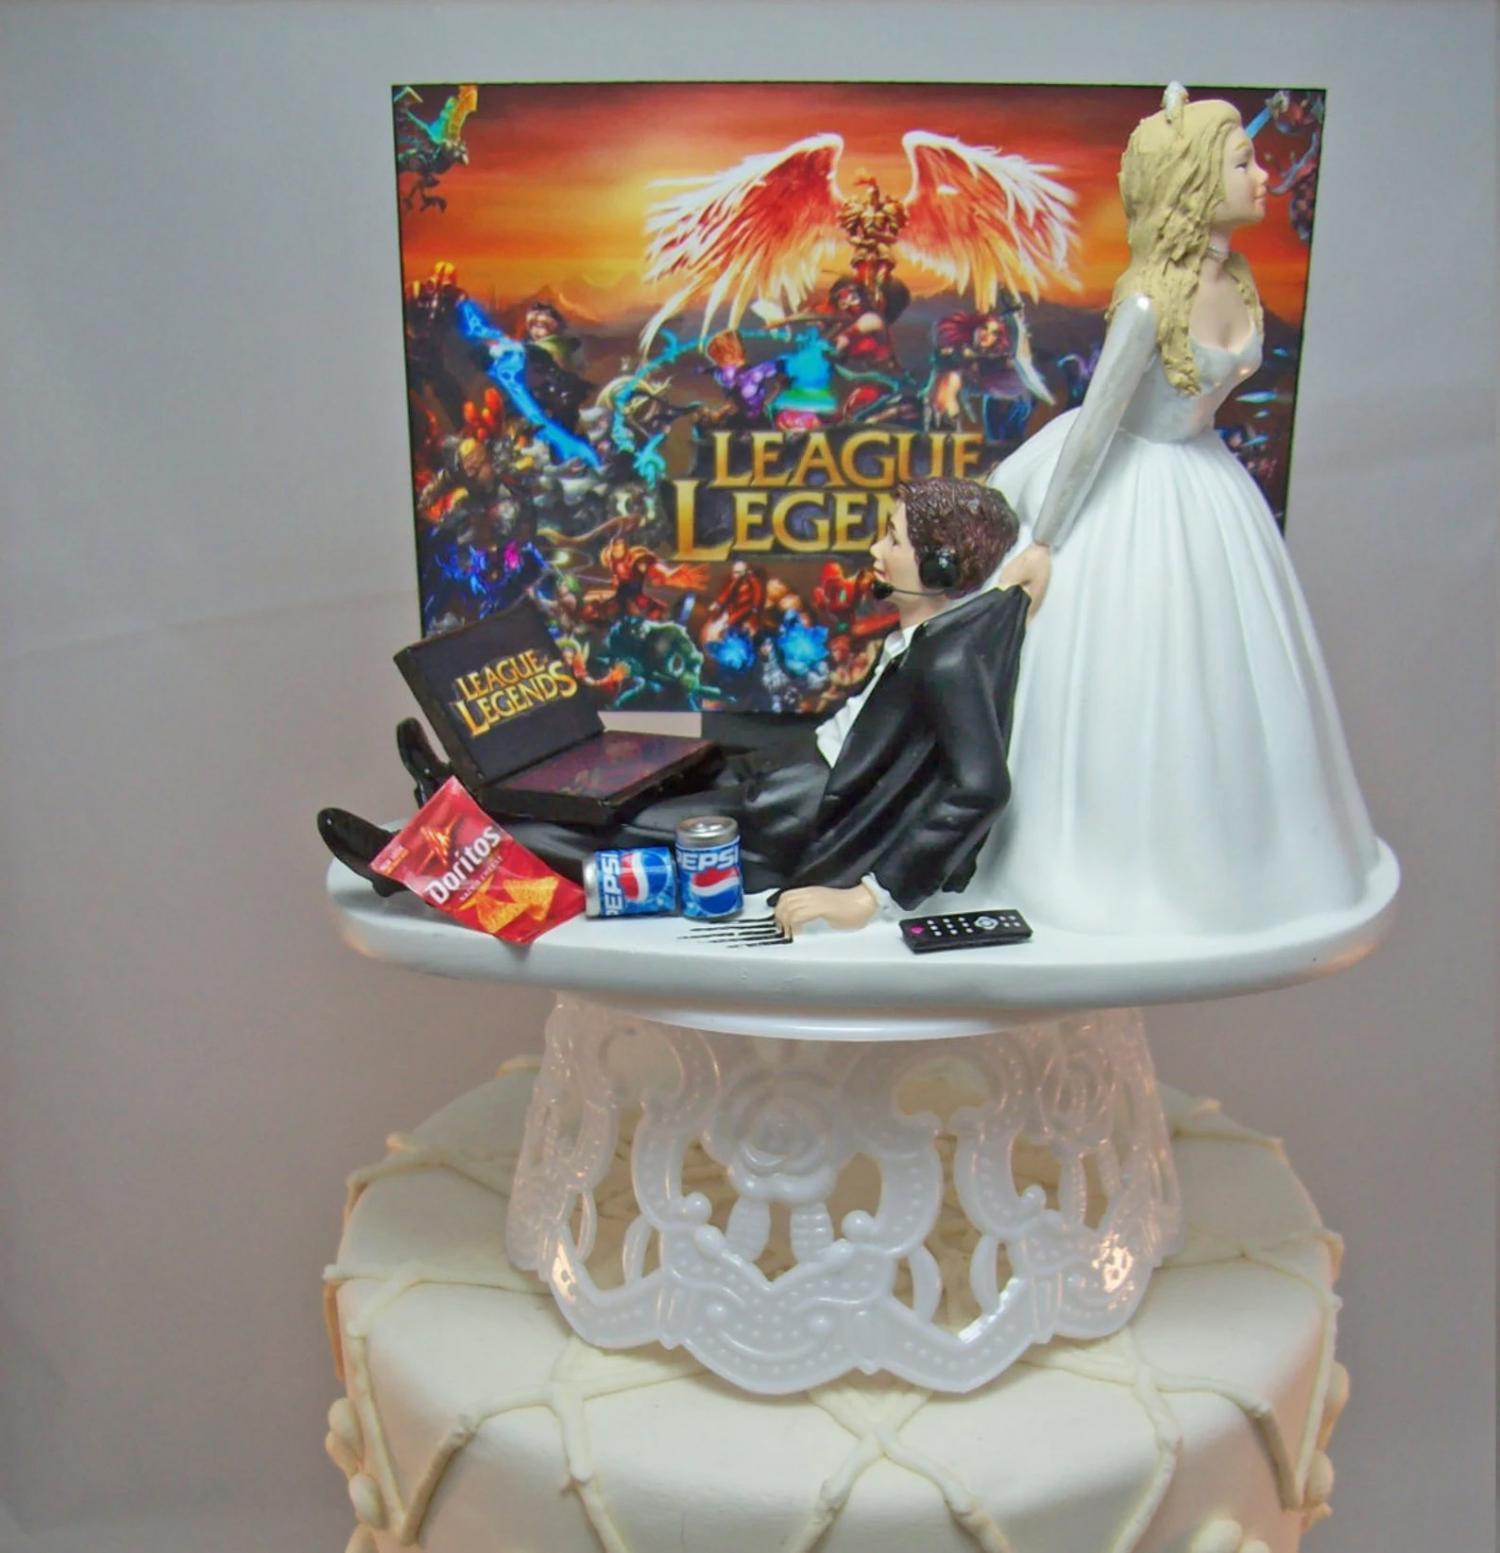 Gamer Wedding Cake Topper - Bride dragging groom away from games cake topper